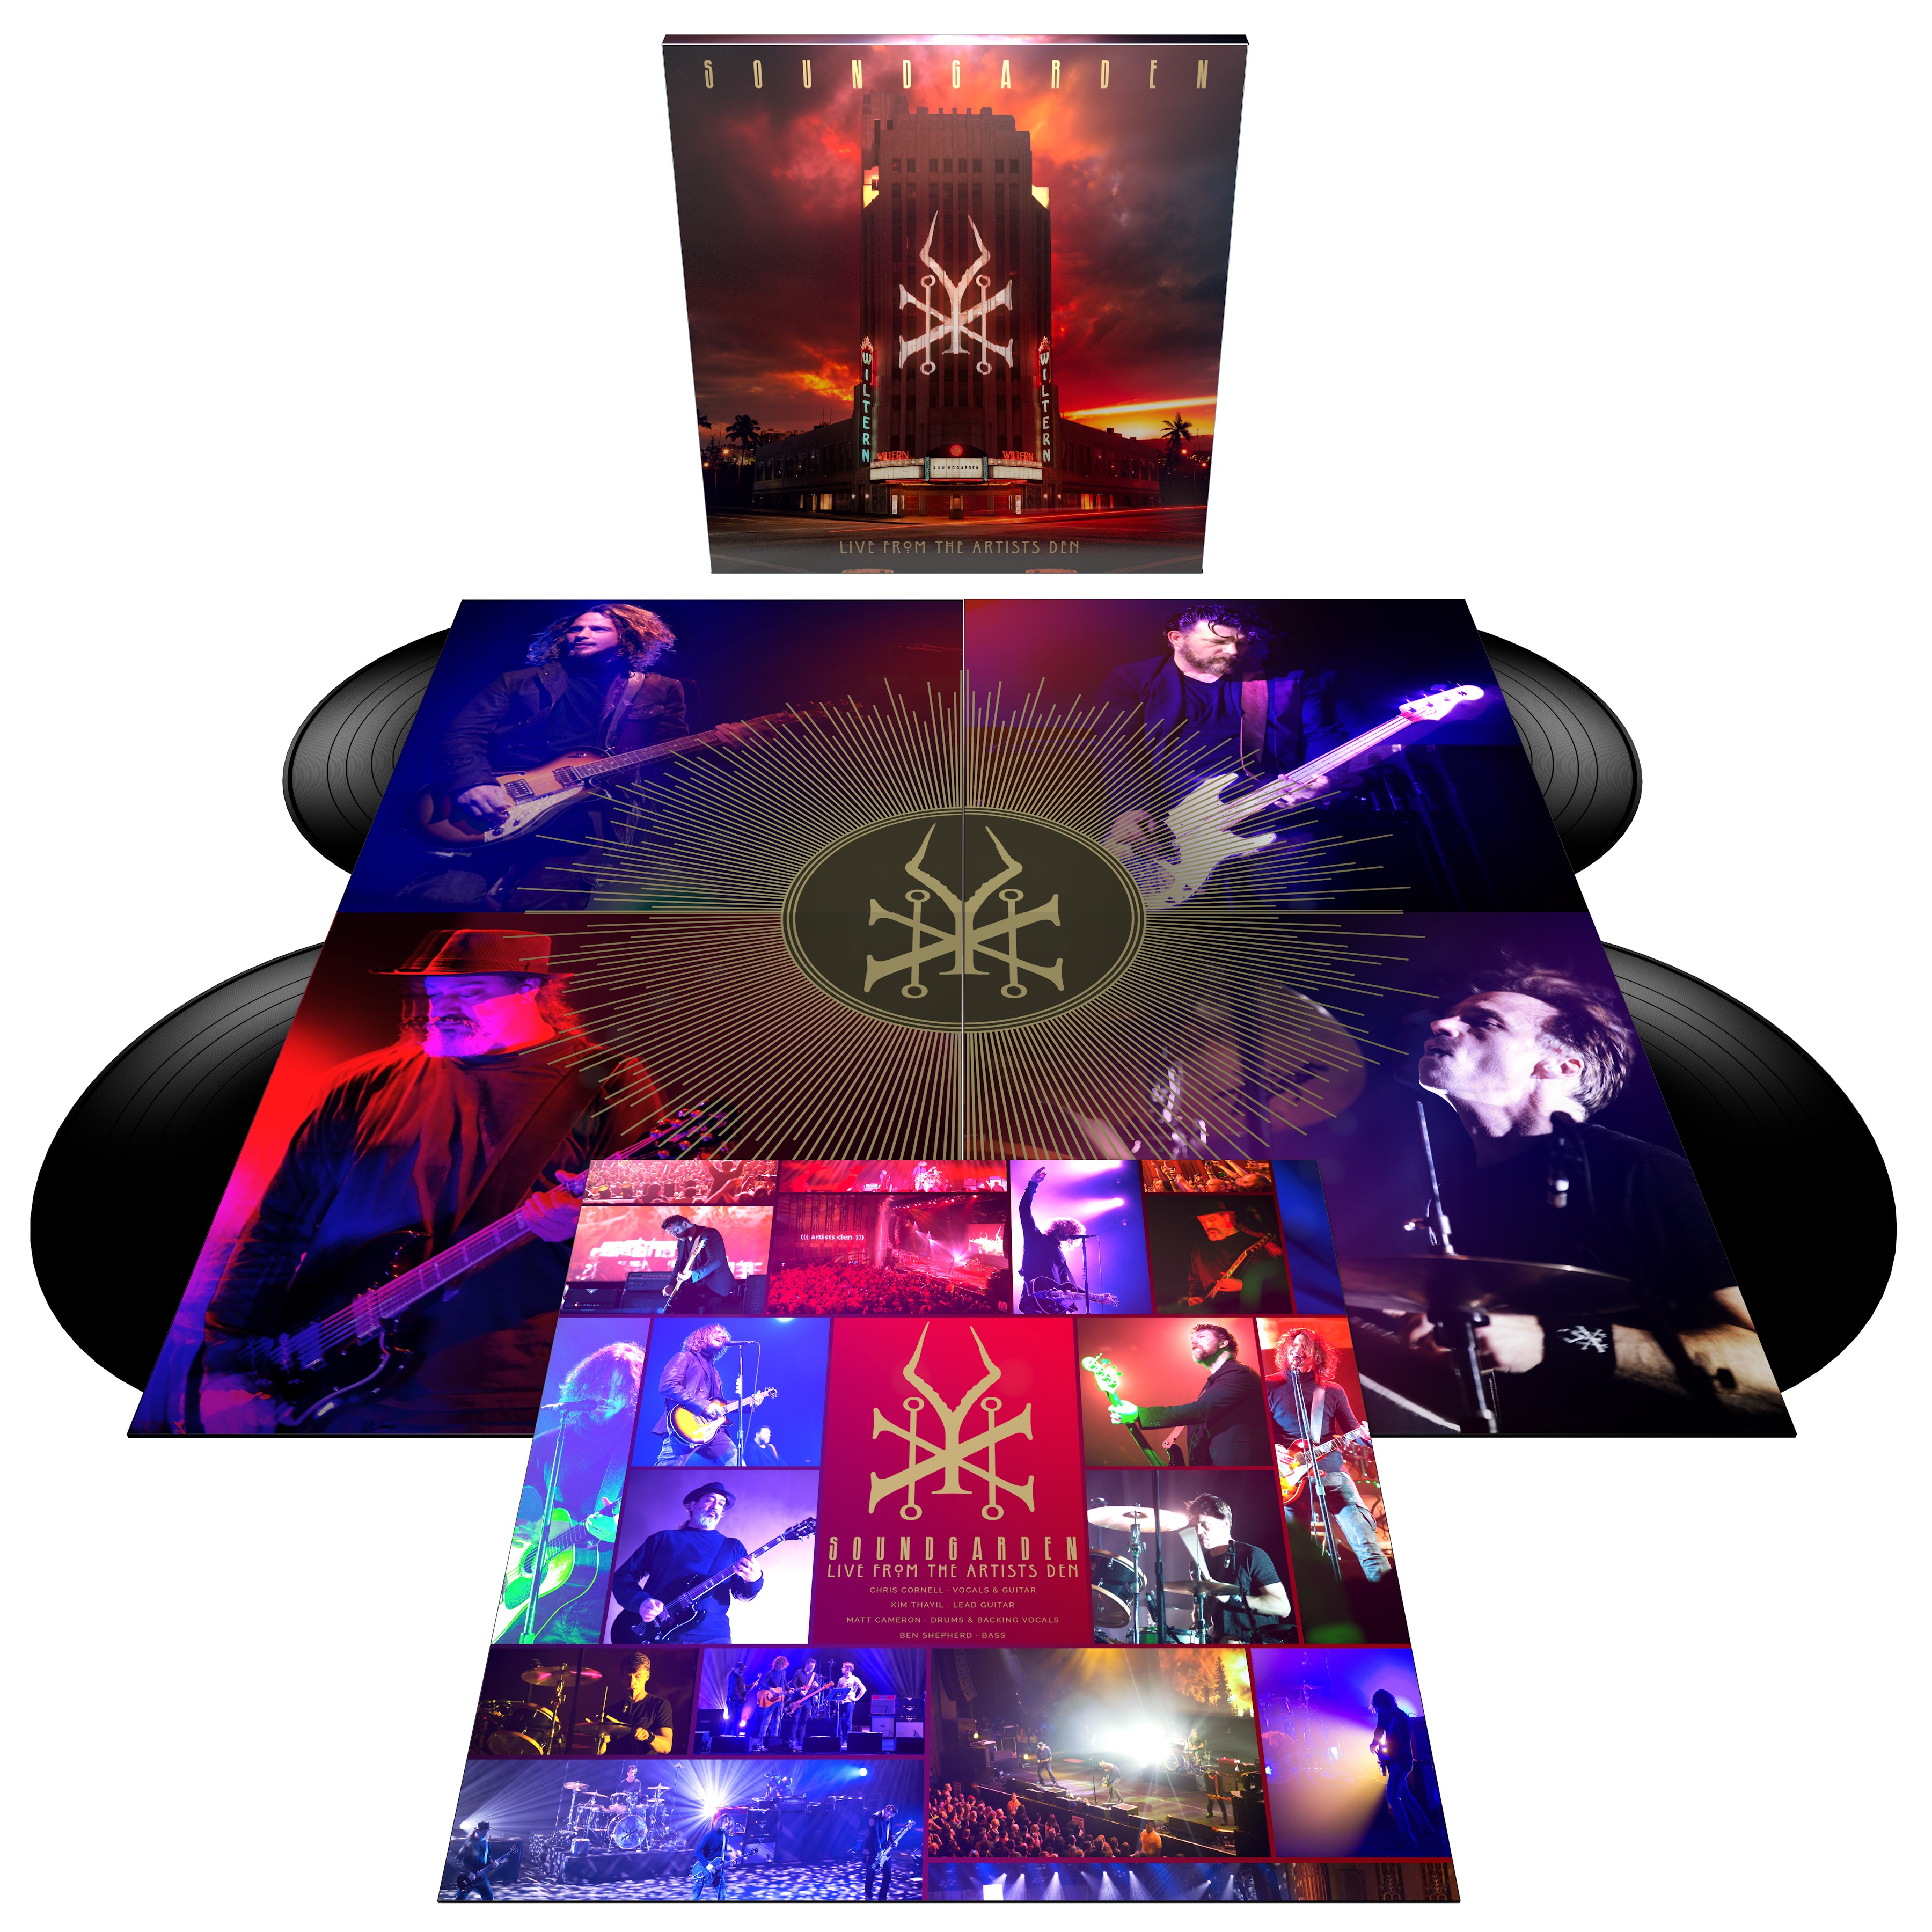 Soundgarden Live From The Artists Den (Vinyl)